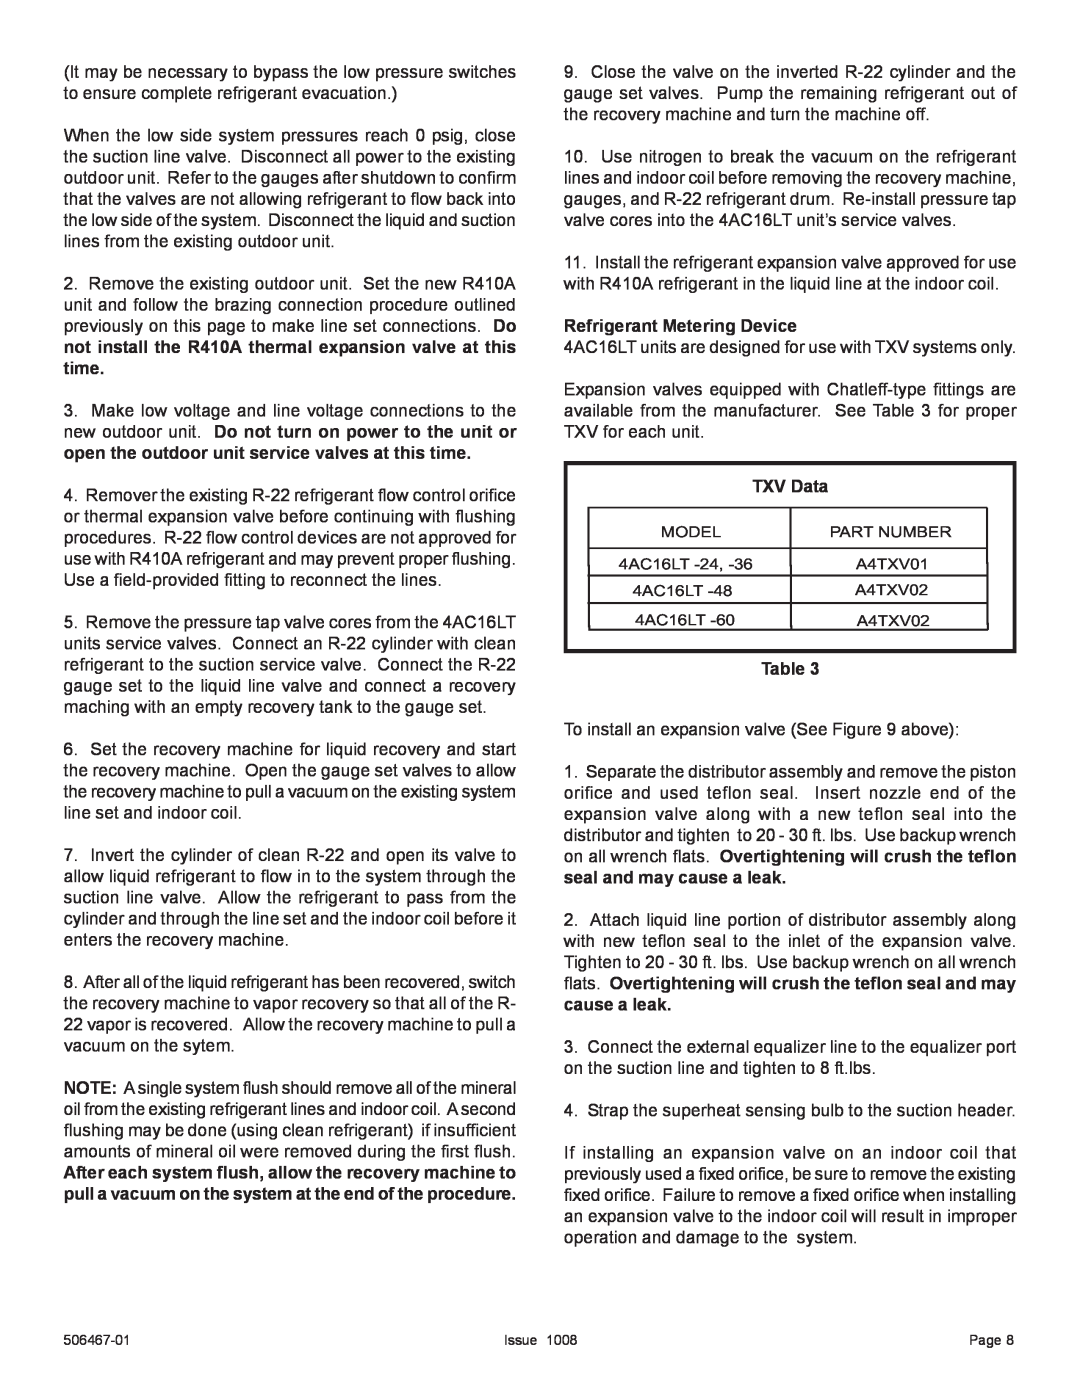 Allied Air Enterprises 4AC16LT manual Refrigerant Metering Device, TXV Data 